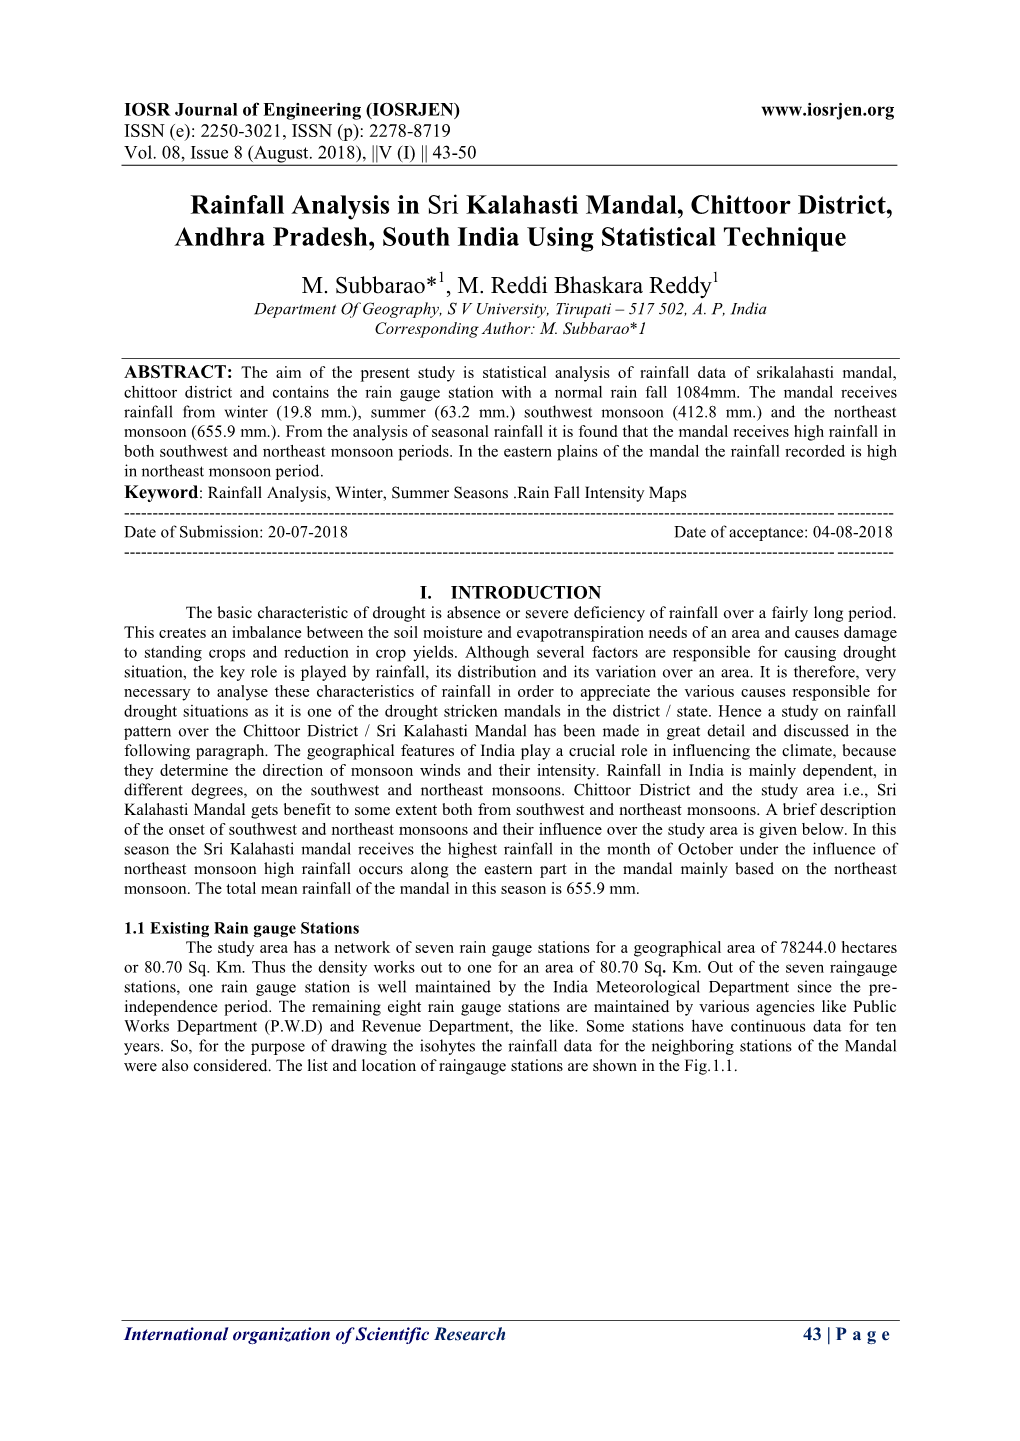 Rainfall Analysis in Sri Kalahasti Mandal, Chittoor District, Andhra Pradesh, South India Using Statistical Technique